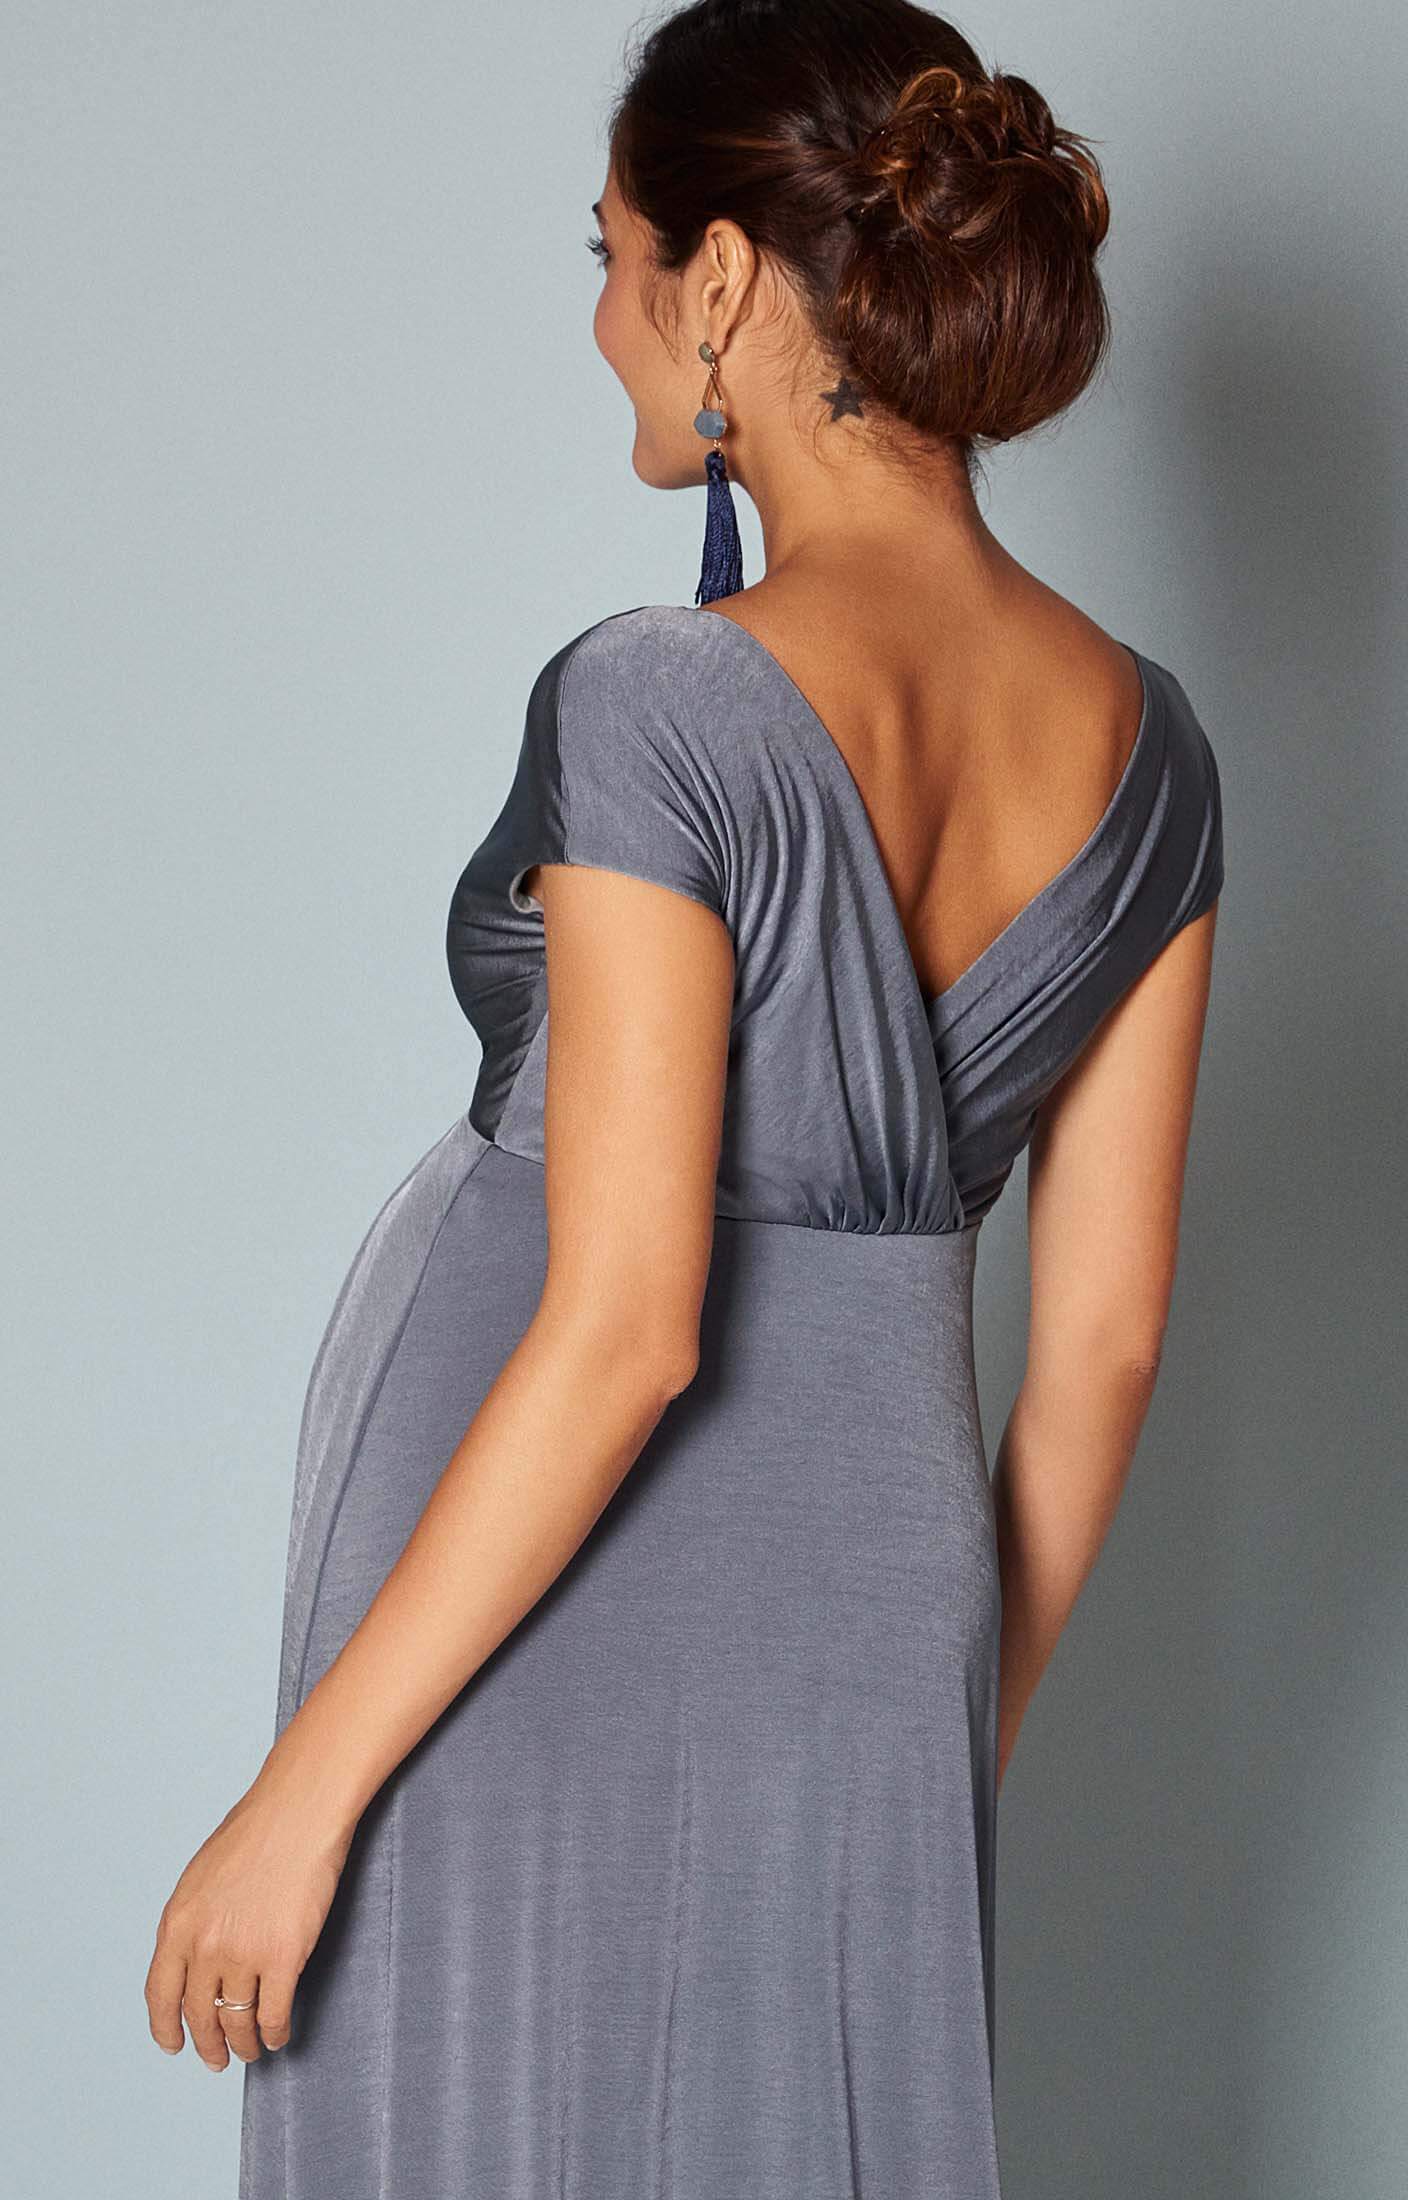 perthwebdesignfirm: Maternity Maxi Dresses Online Uk